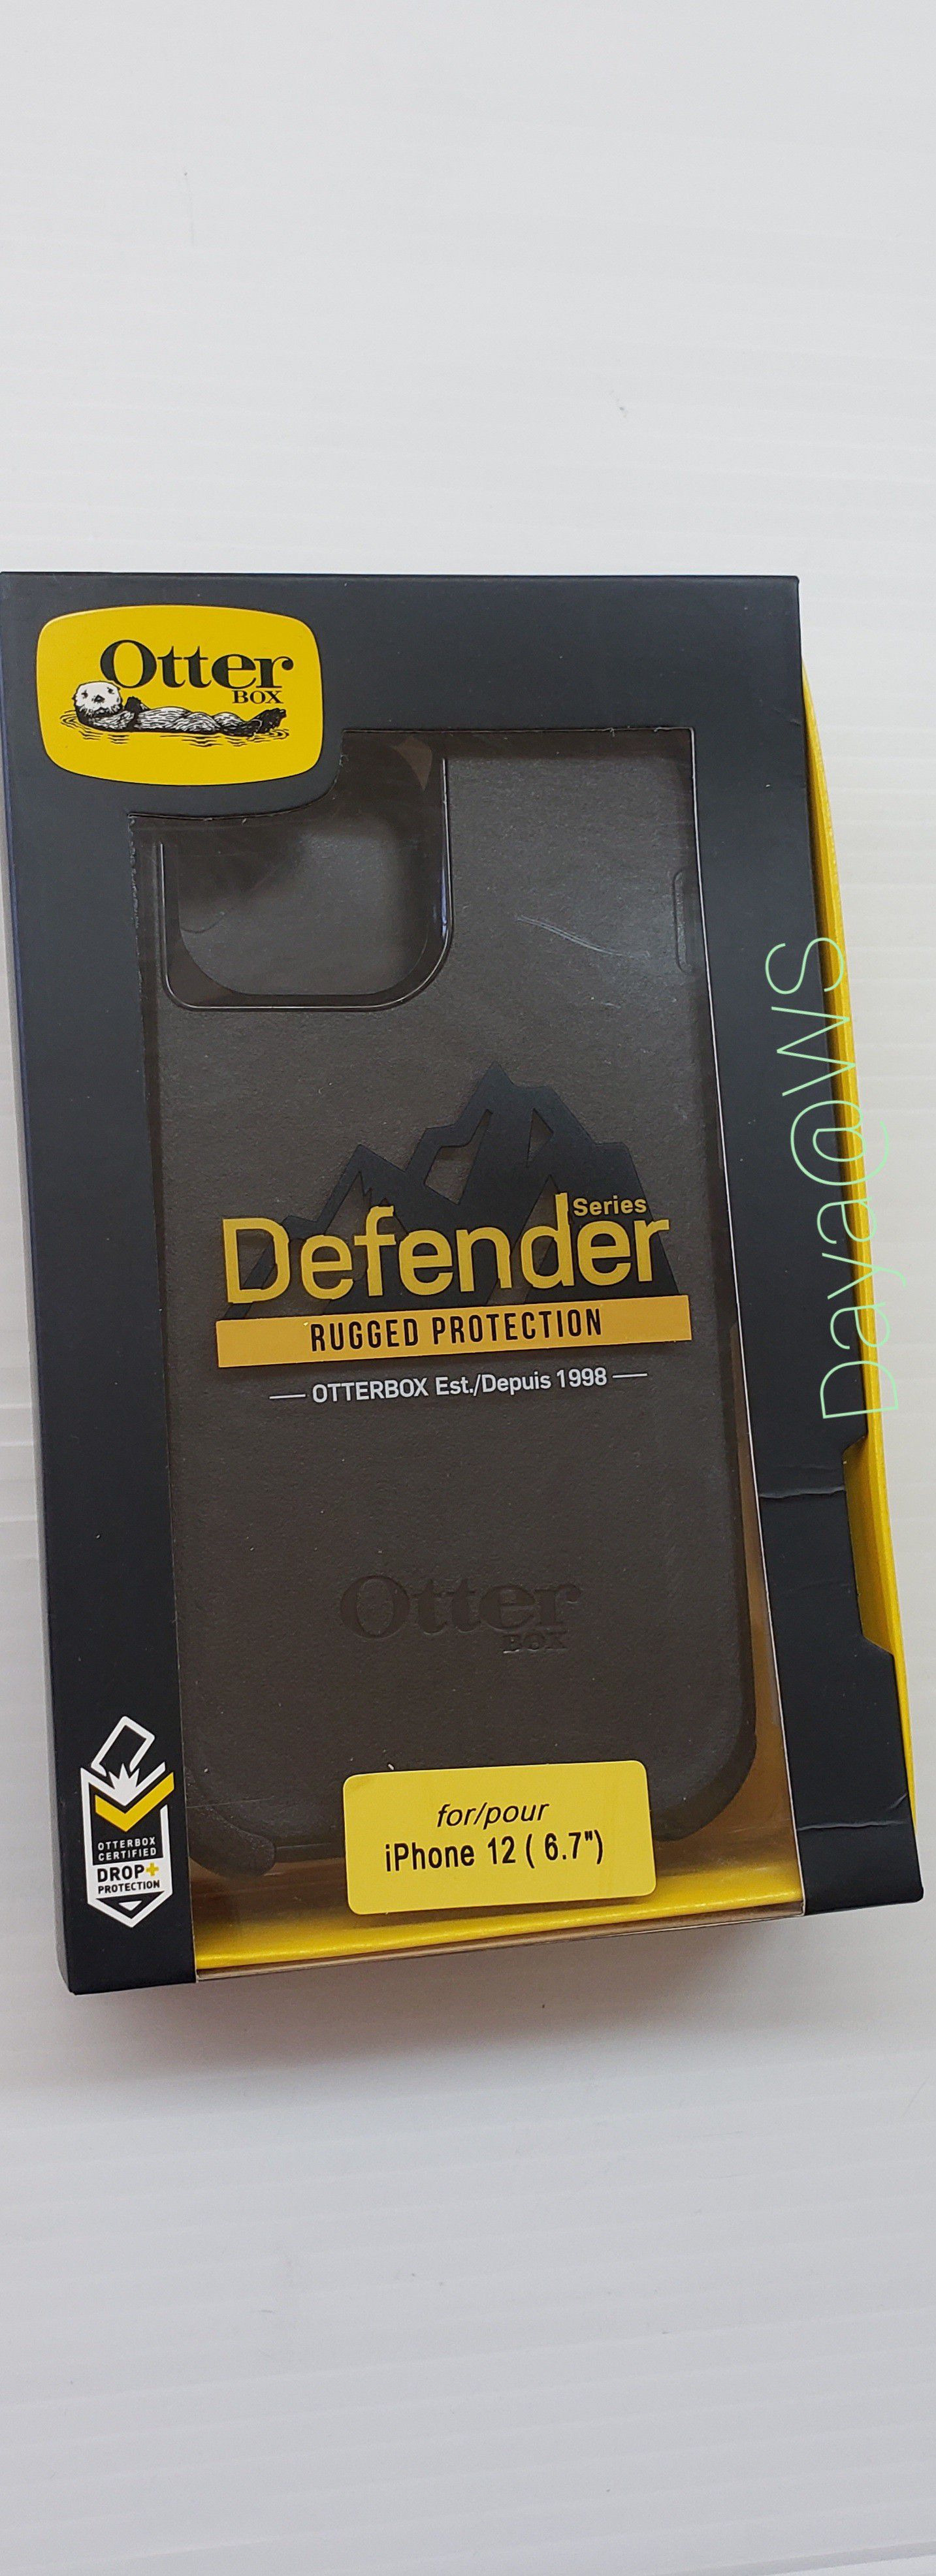 iPhone 12 otterbox defender cases